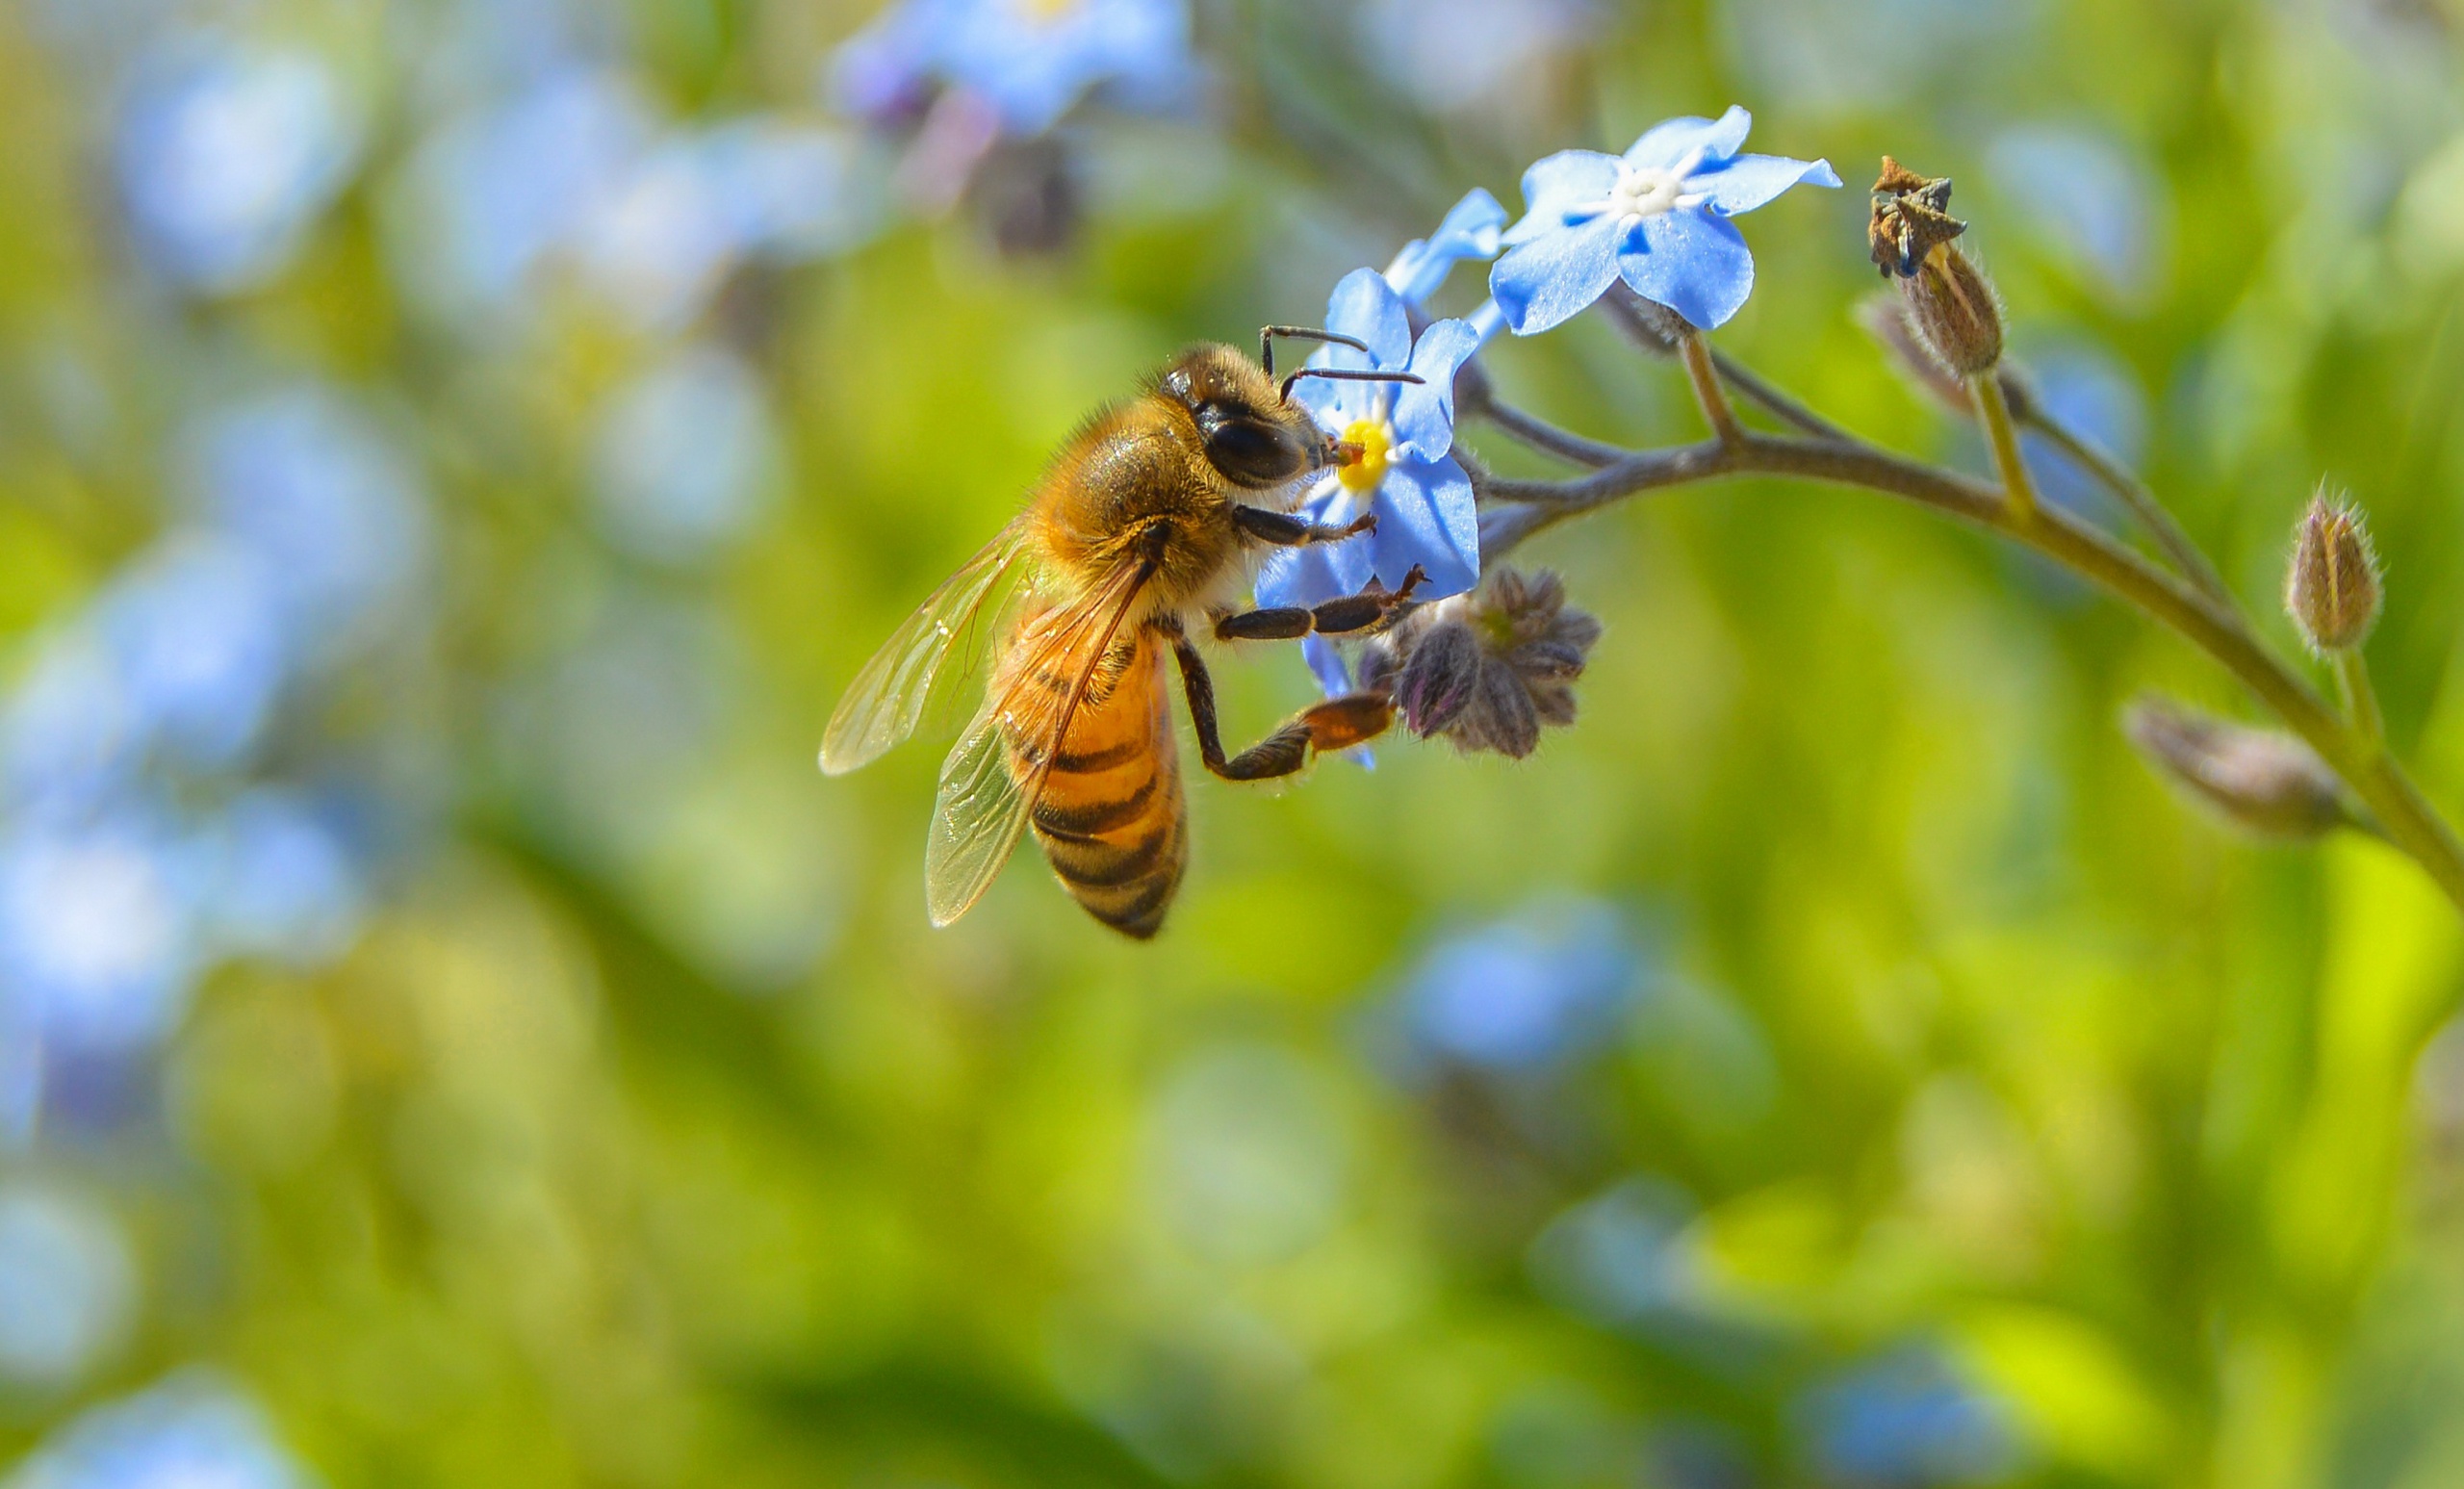 Handy-Wallpaper Tiere, Insekten, Blume, Makro, Insekt, Biene, Blaue Blume kostenlos herunterladen.